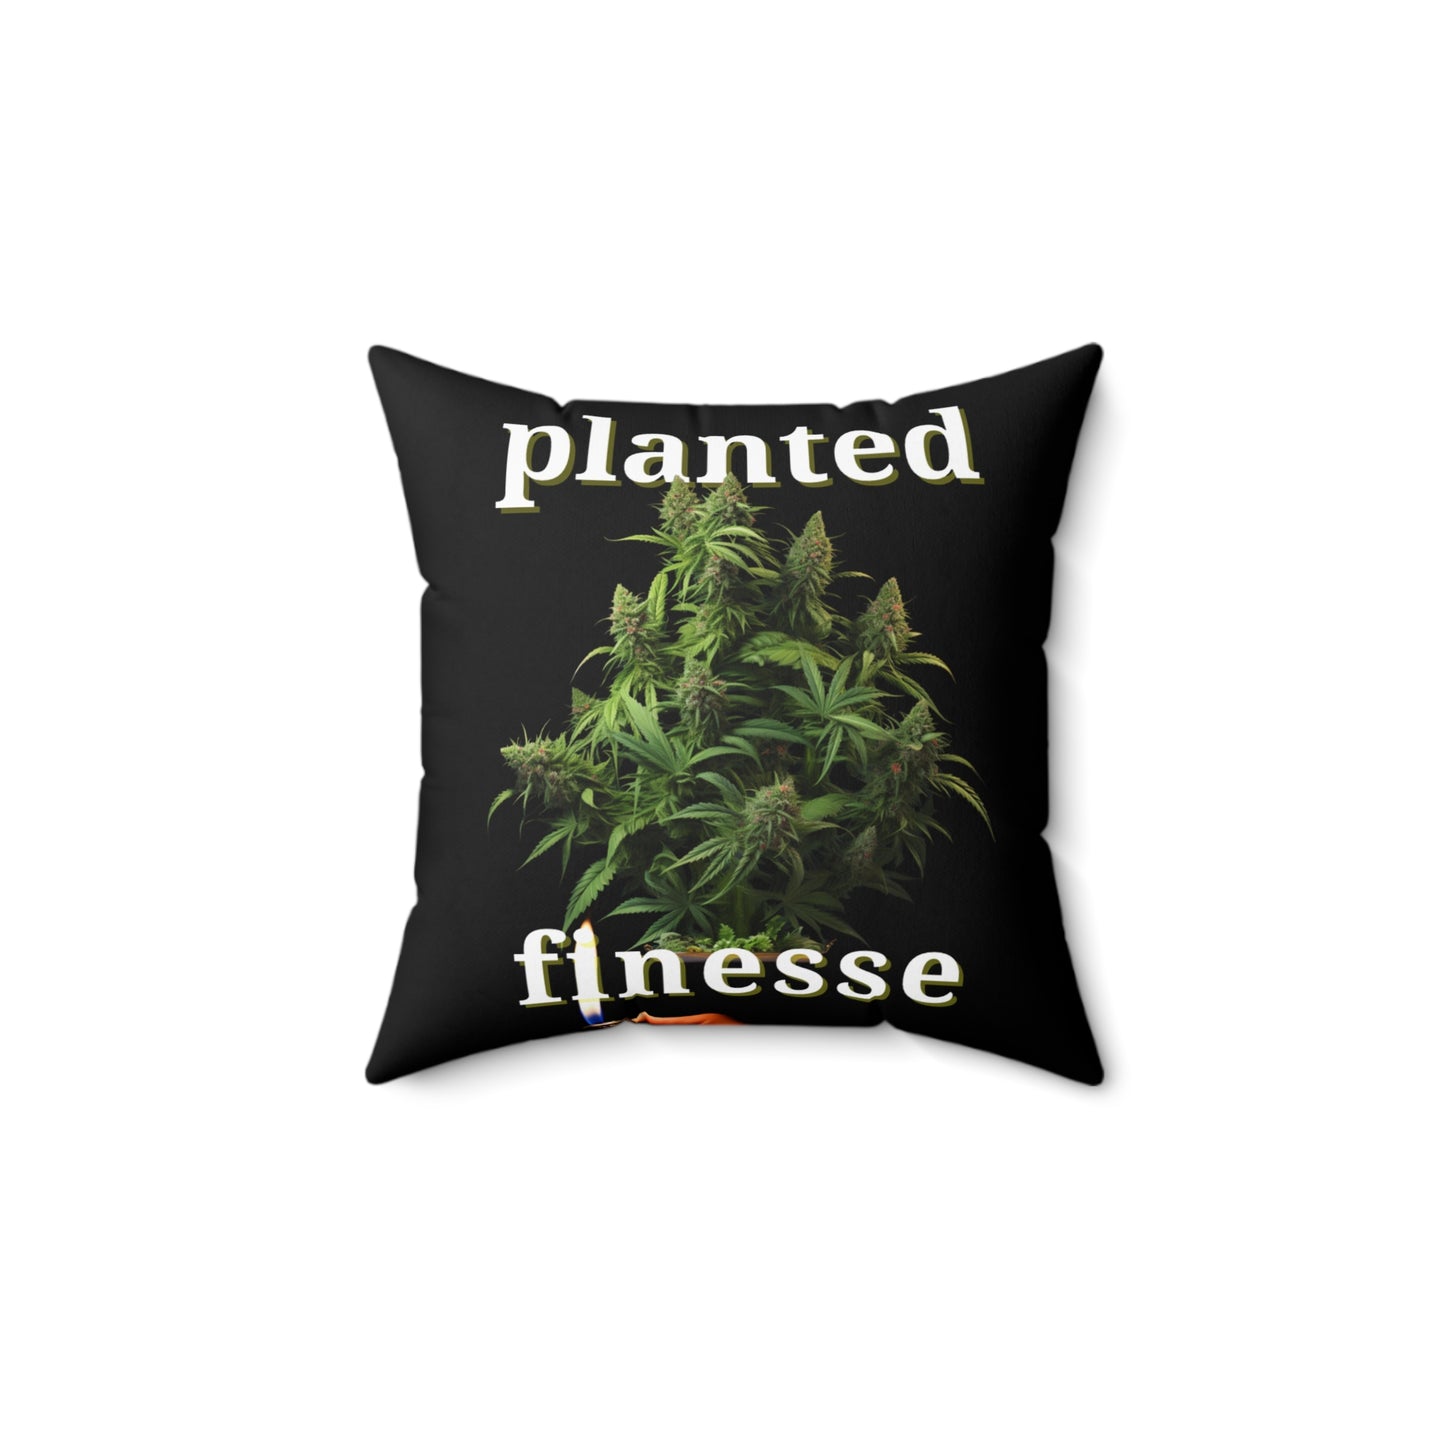 P.S. Unltd. “Planted Finesse” Throw Pillow